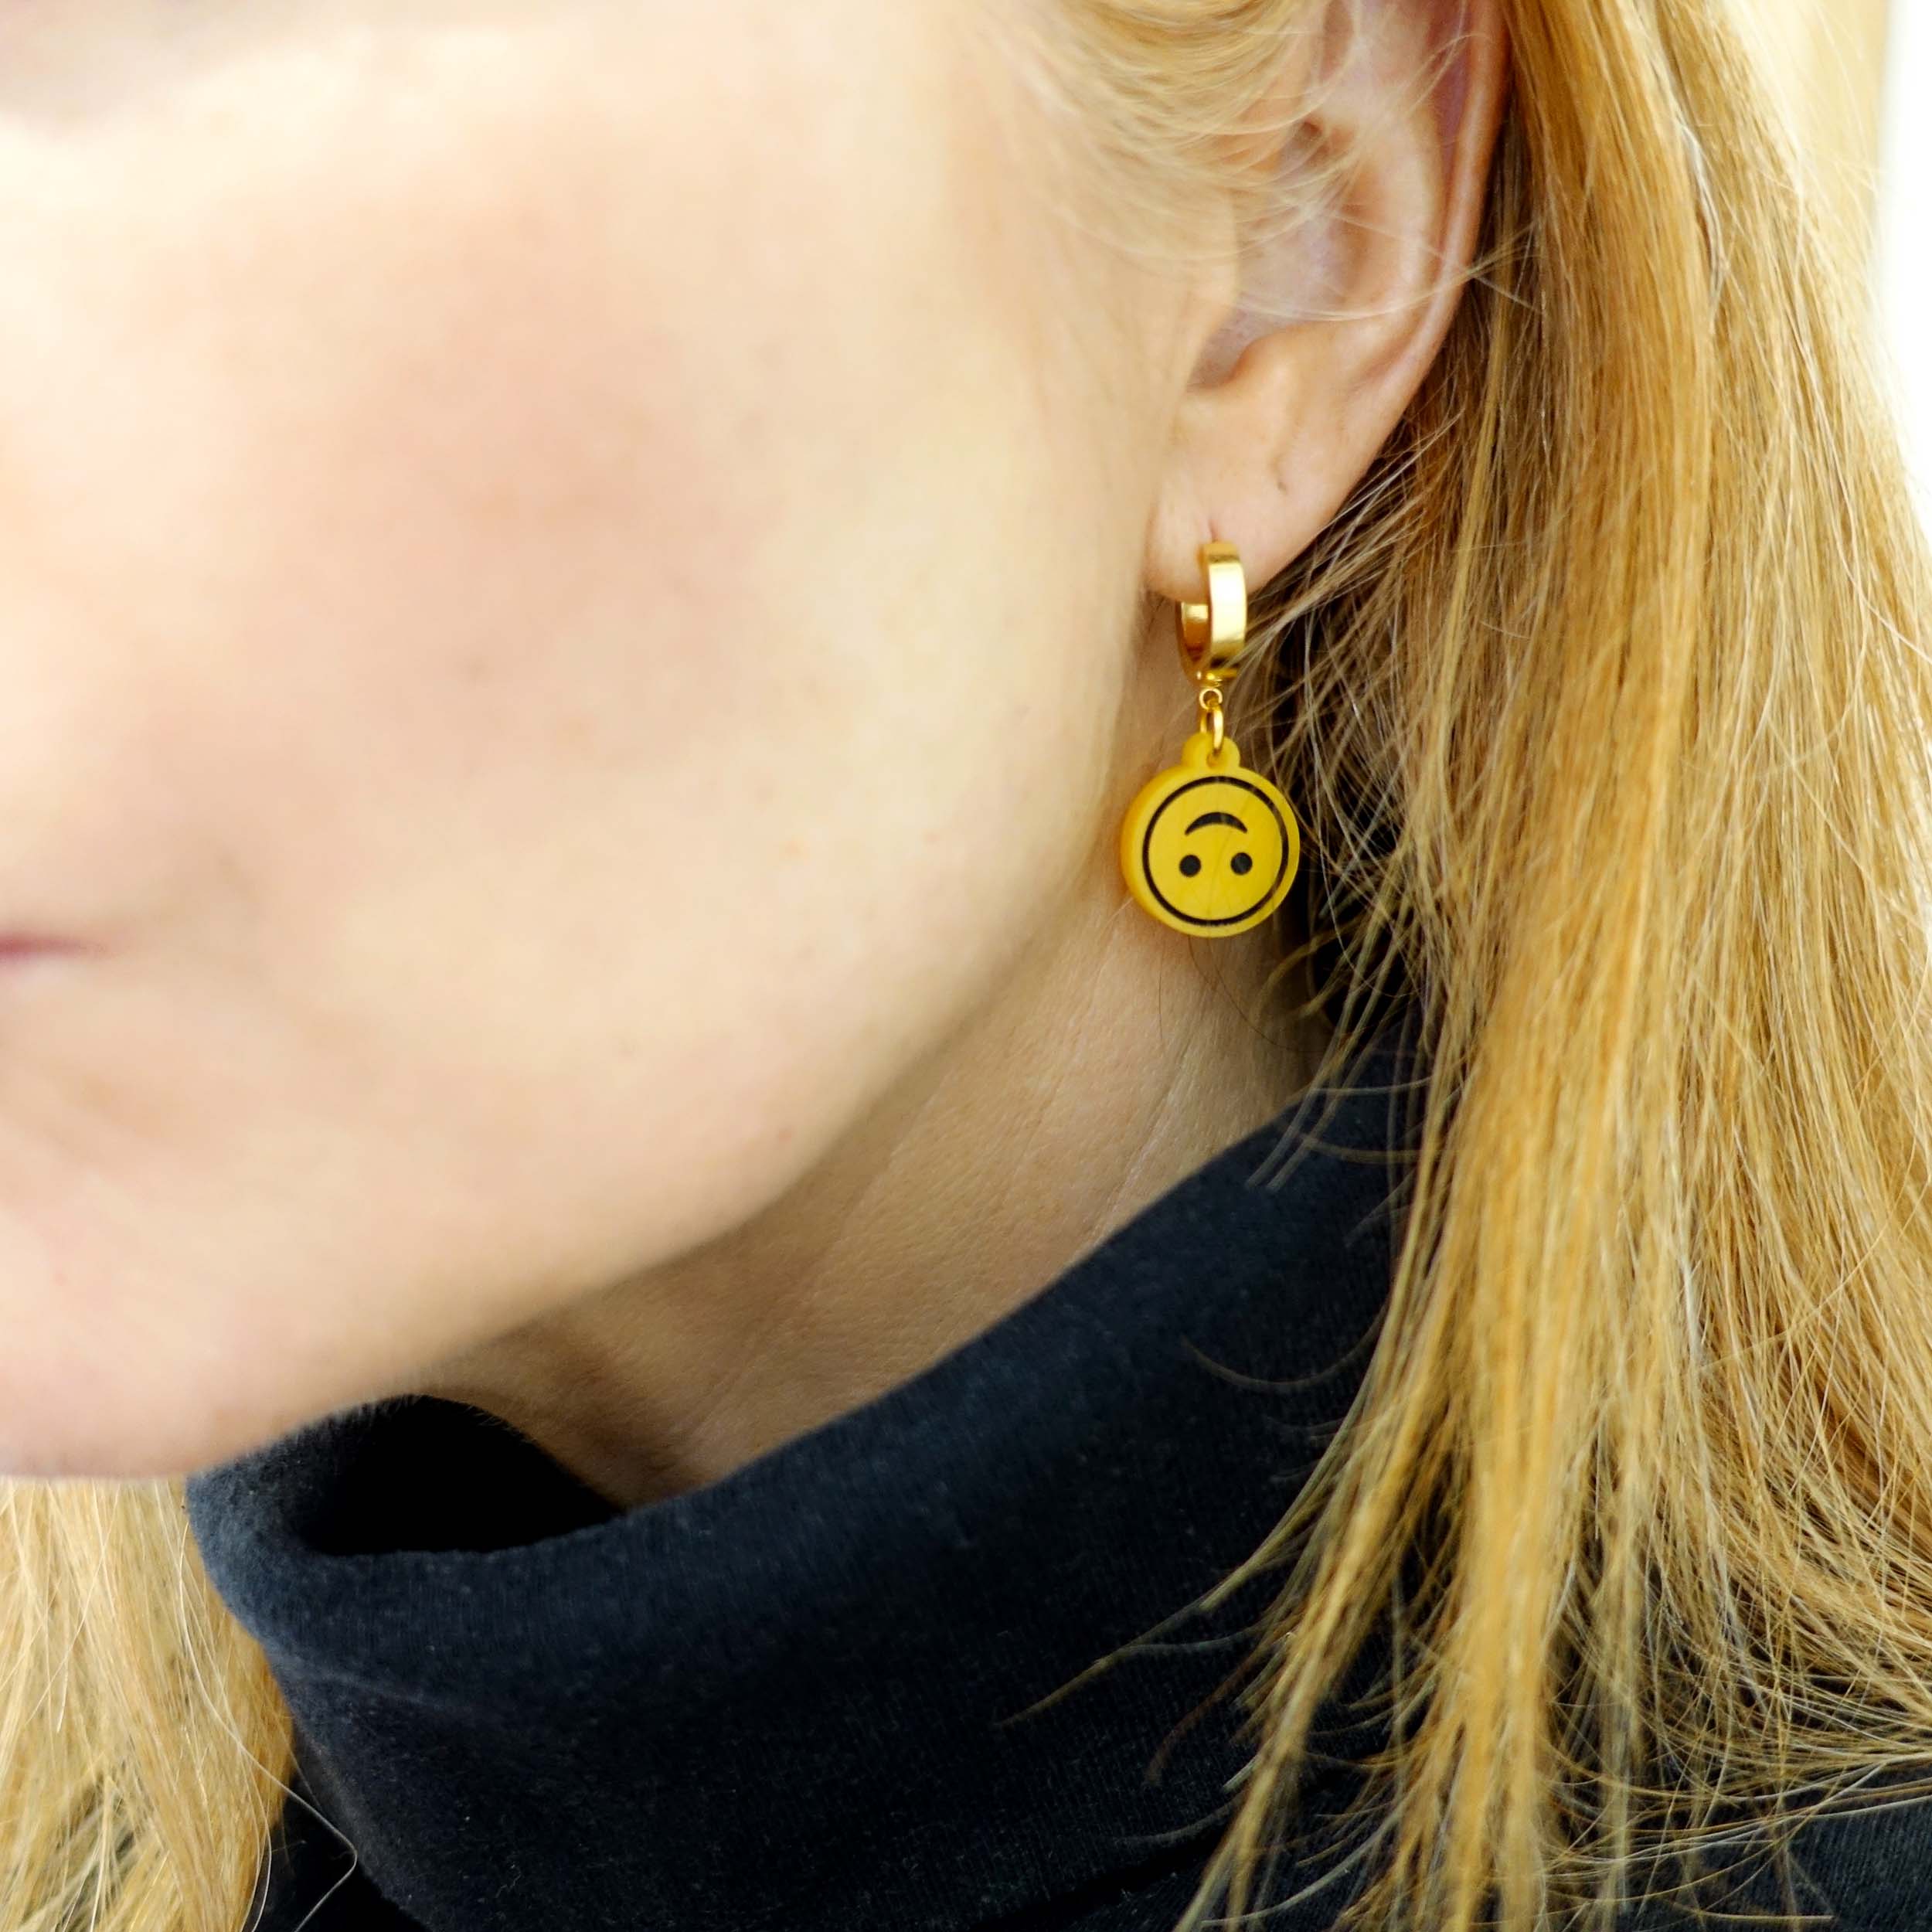 Sarah Day wears Upside-down smiley face earrings on gold huggie hoops.  